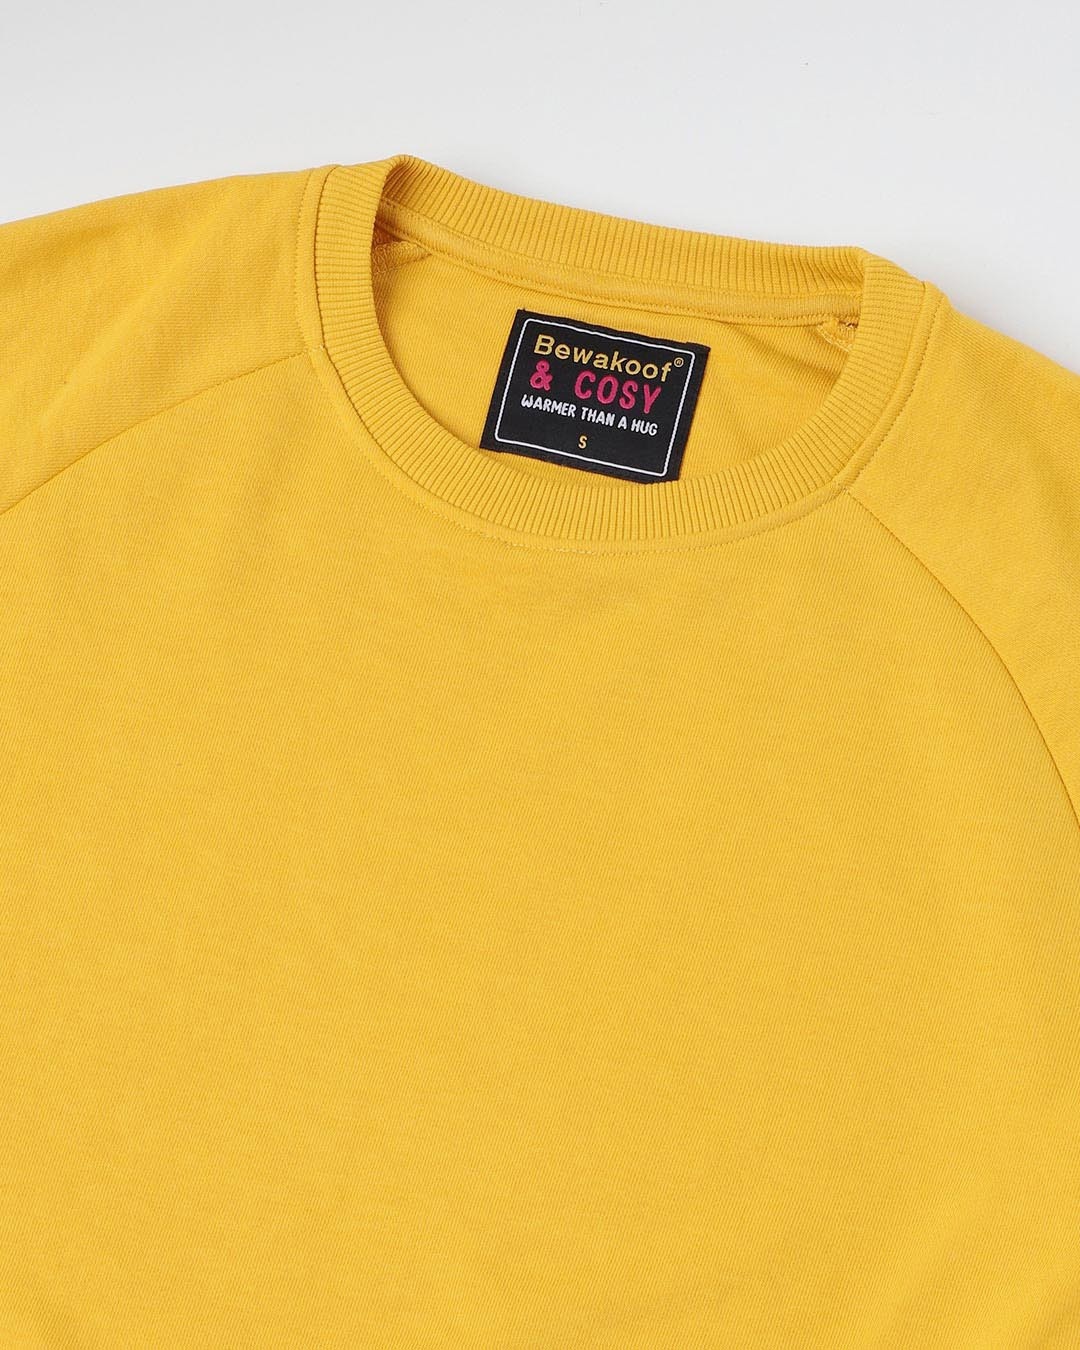 Shop Women's Solid Yellow Sweatshirt